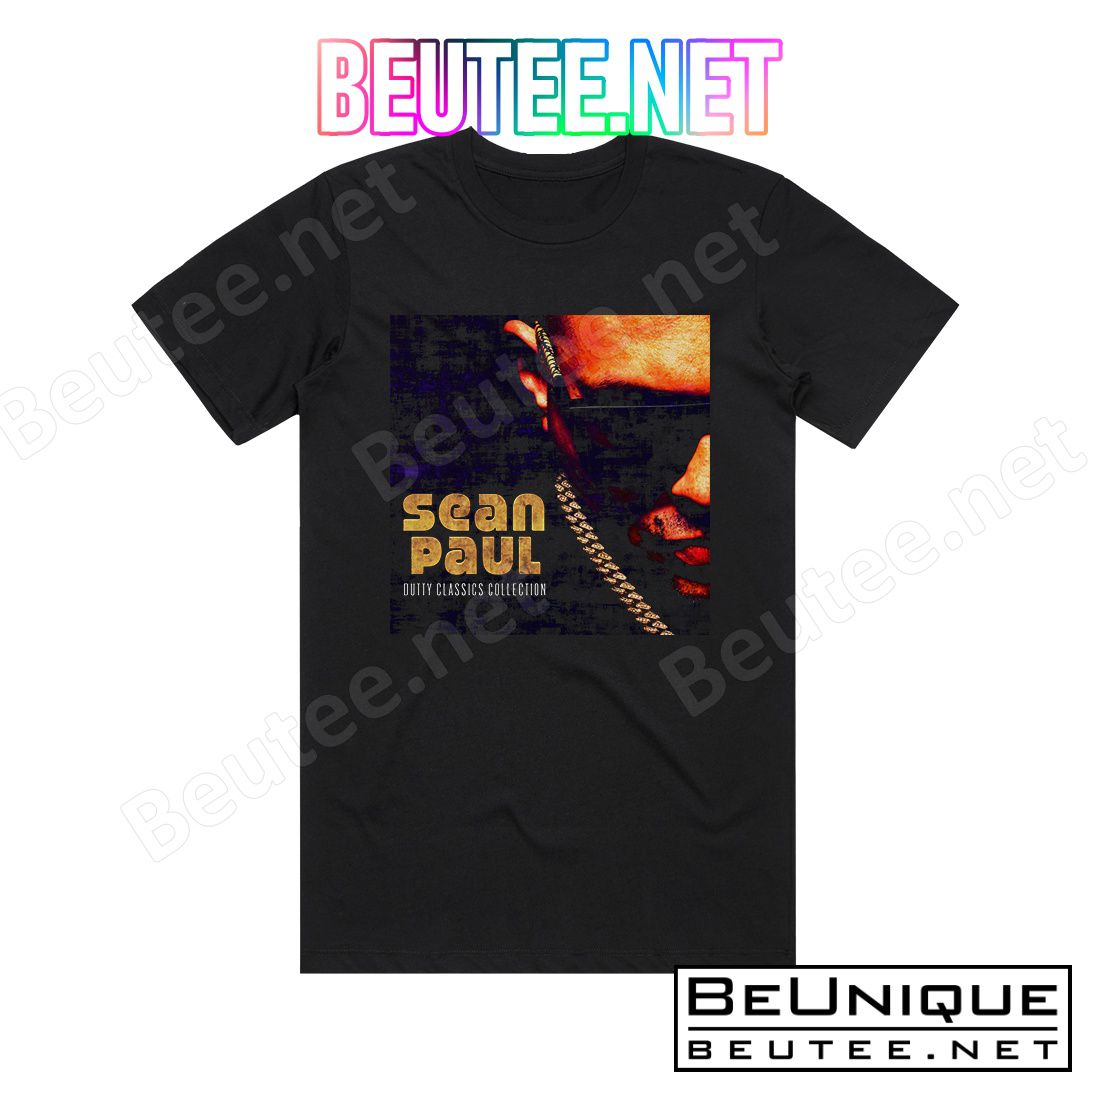 Sean Paul Dutty Classics Collection Album Cover T-Shirt